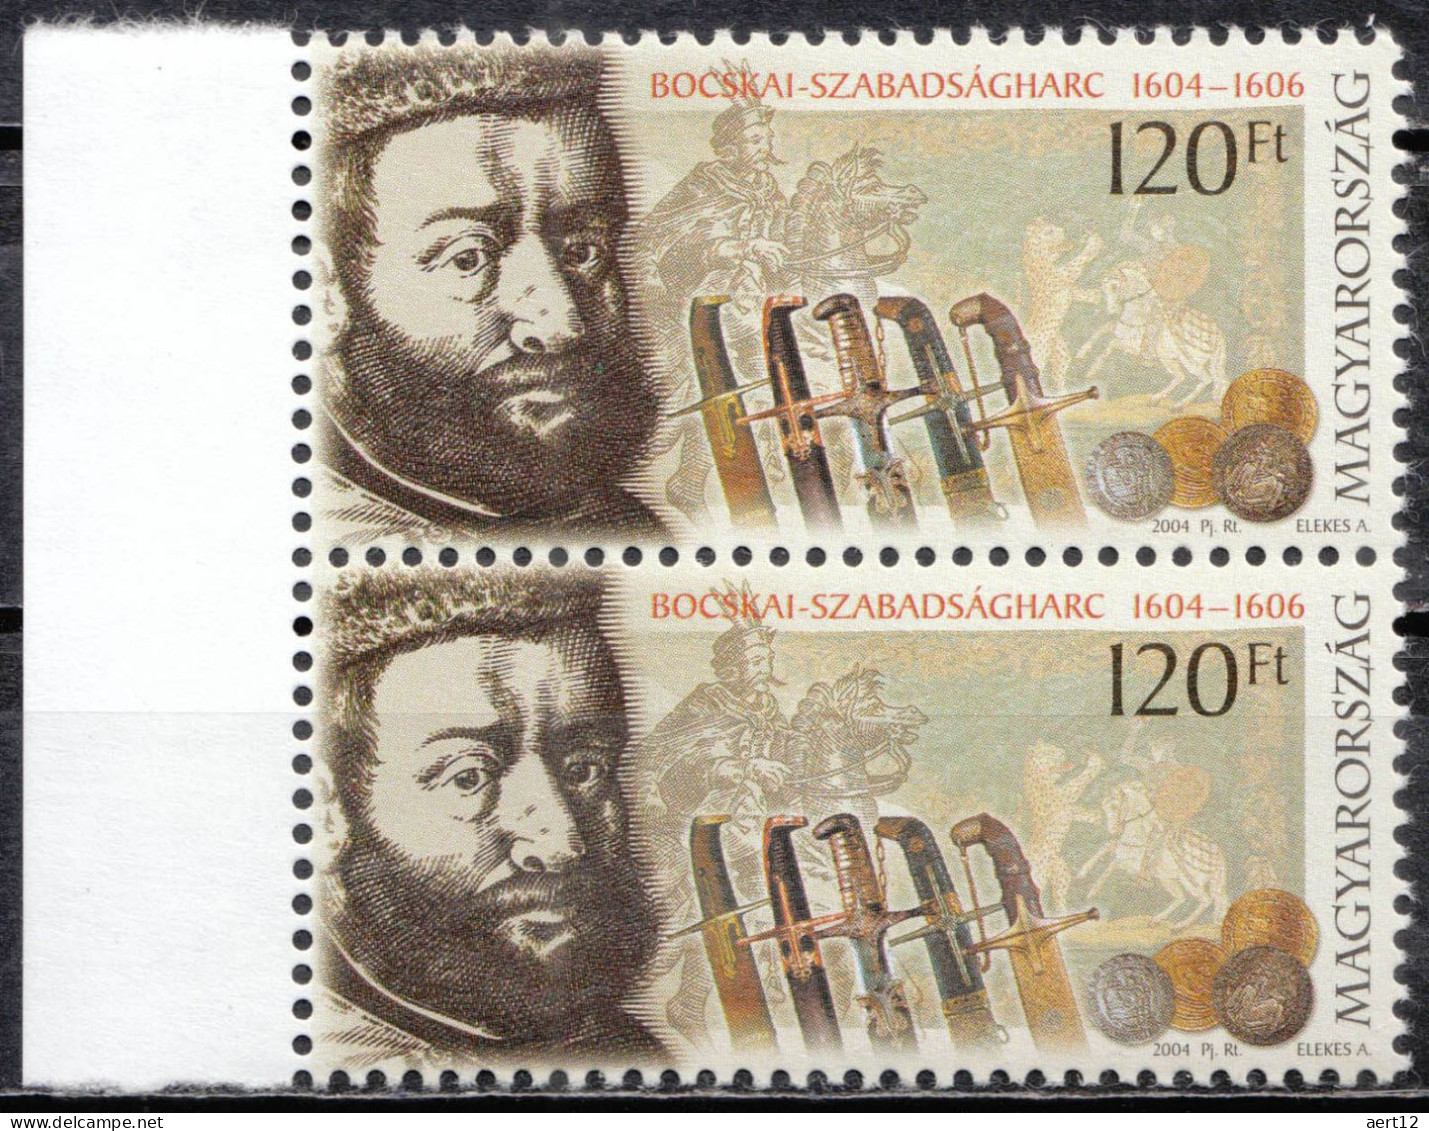 2004, Hungary, Bocskai, Anniversaries And Jubilees, Battle, Coins, Horses, 2 Stamps, MNH(**), HU 4954x2 - Nuevos